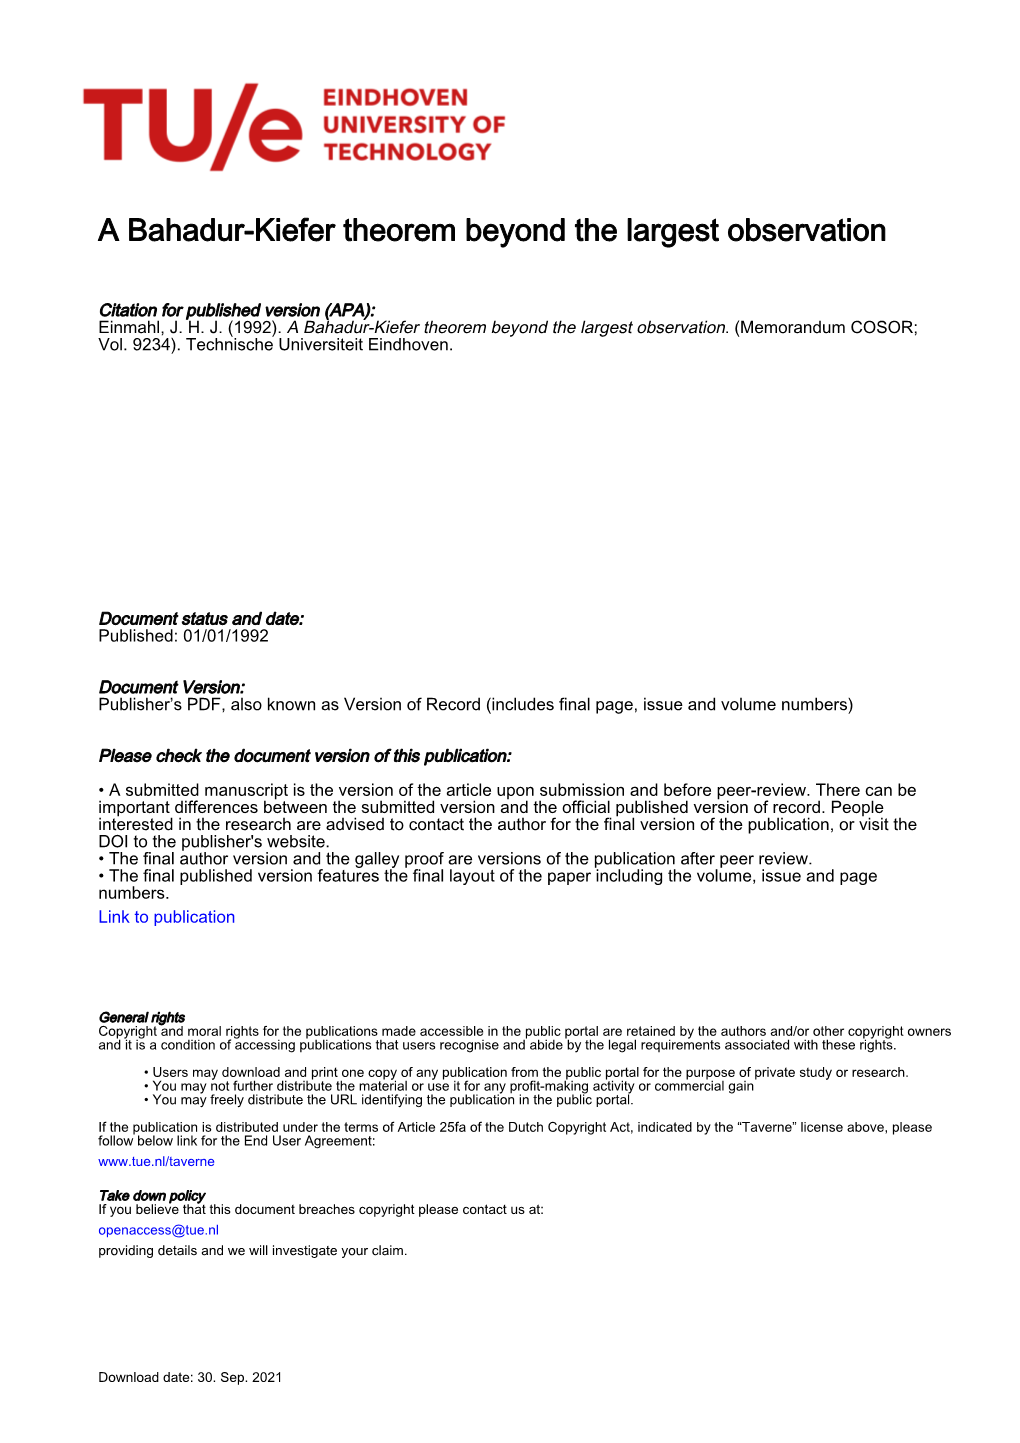 A Bahadur-Kiefer Theorem Beyond the Largest Observation